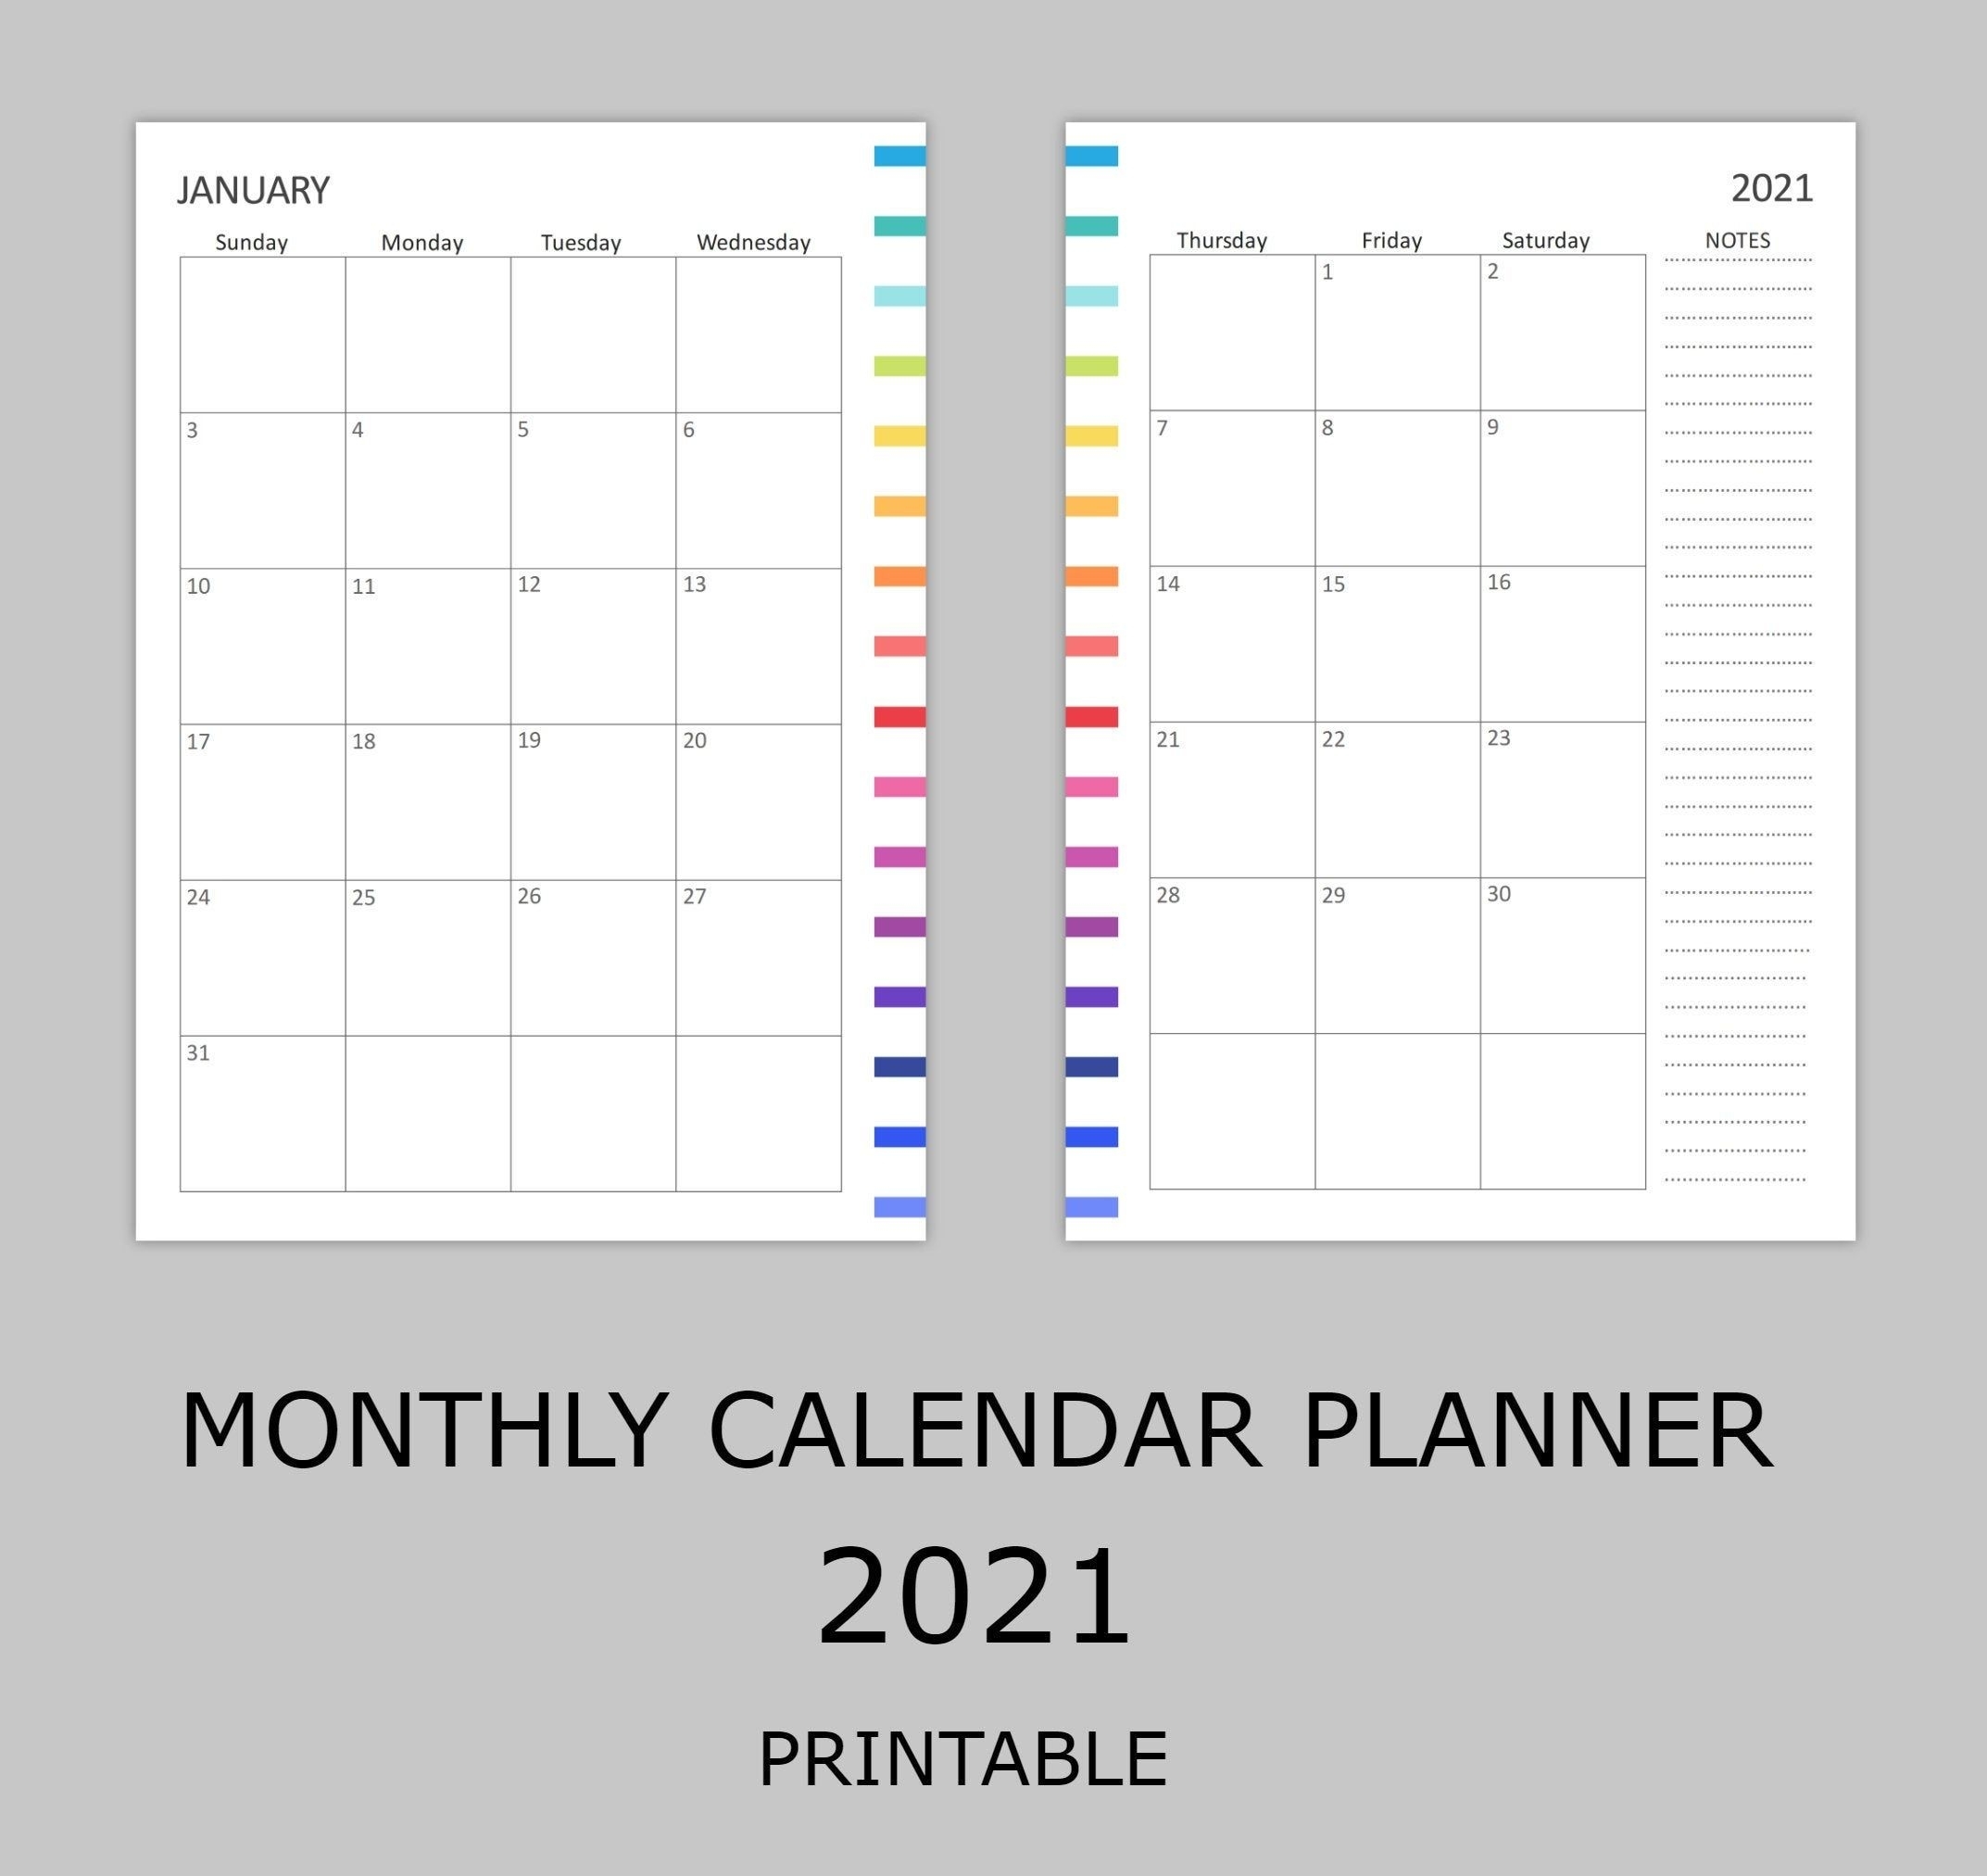 Monthly Planner 2021 Calendar Printable Pdf | Etsy In 2020